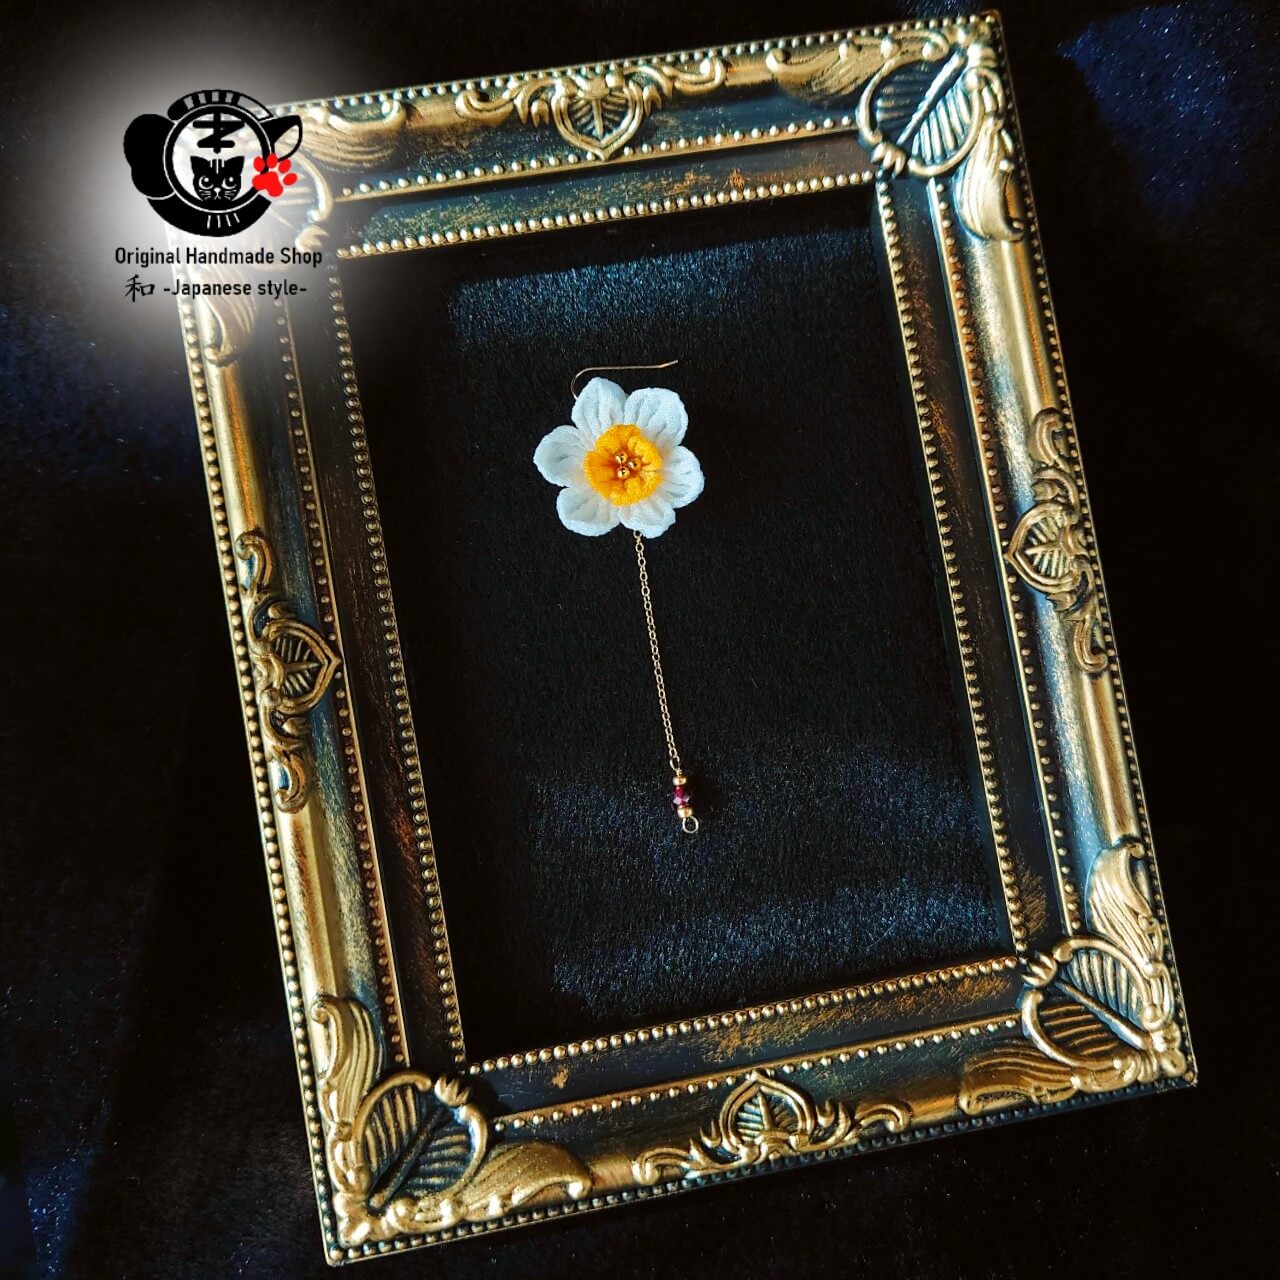 [Birthday Flower Of January][Choice of birthstones] Daffodils And Birthstone Earrings【１月誕生花】【選べる誕生石】水仙と誕生石のピアス